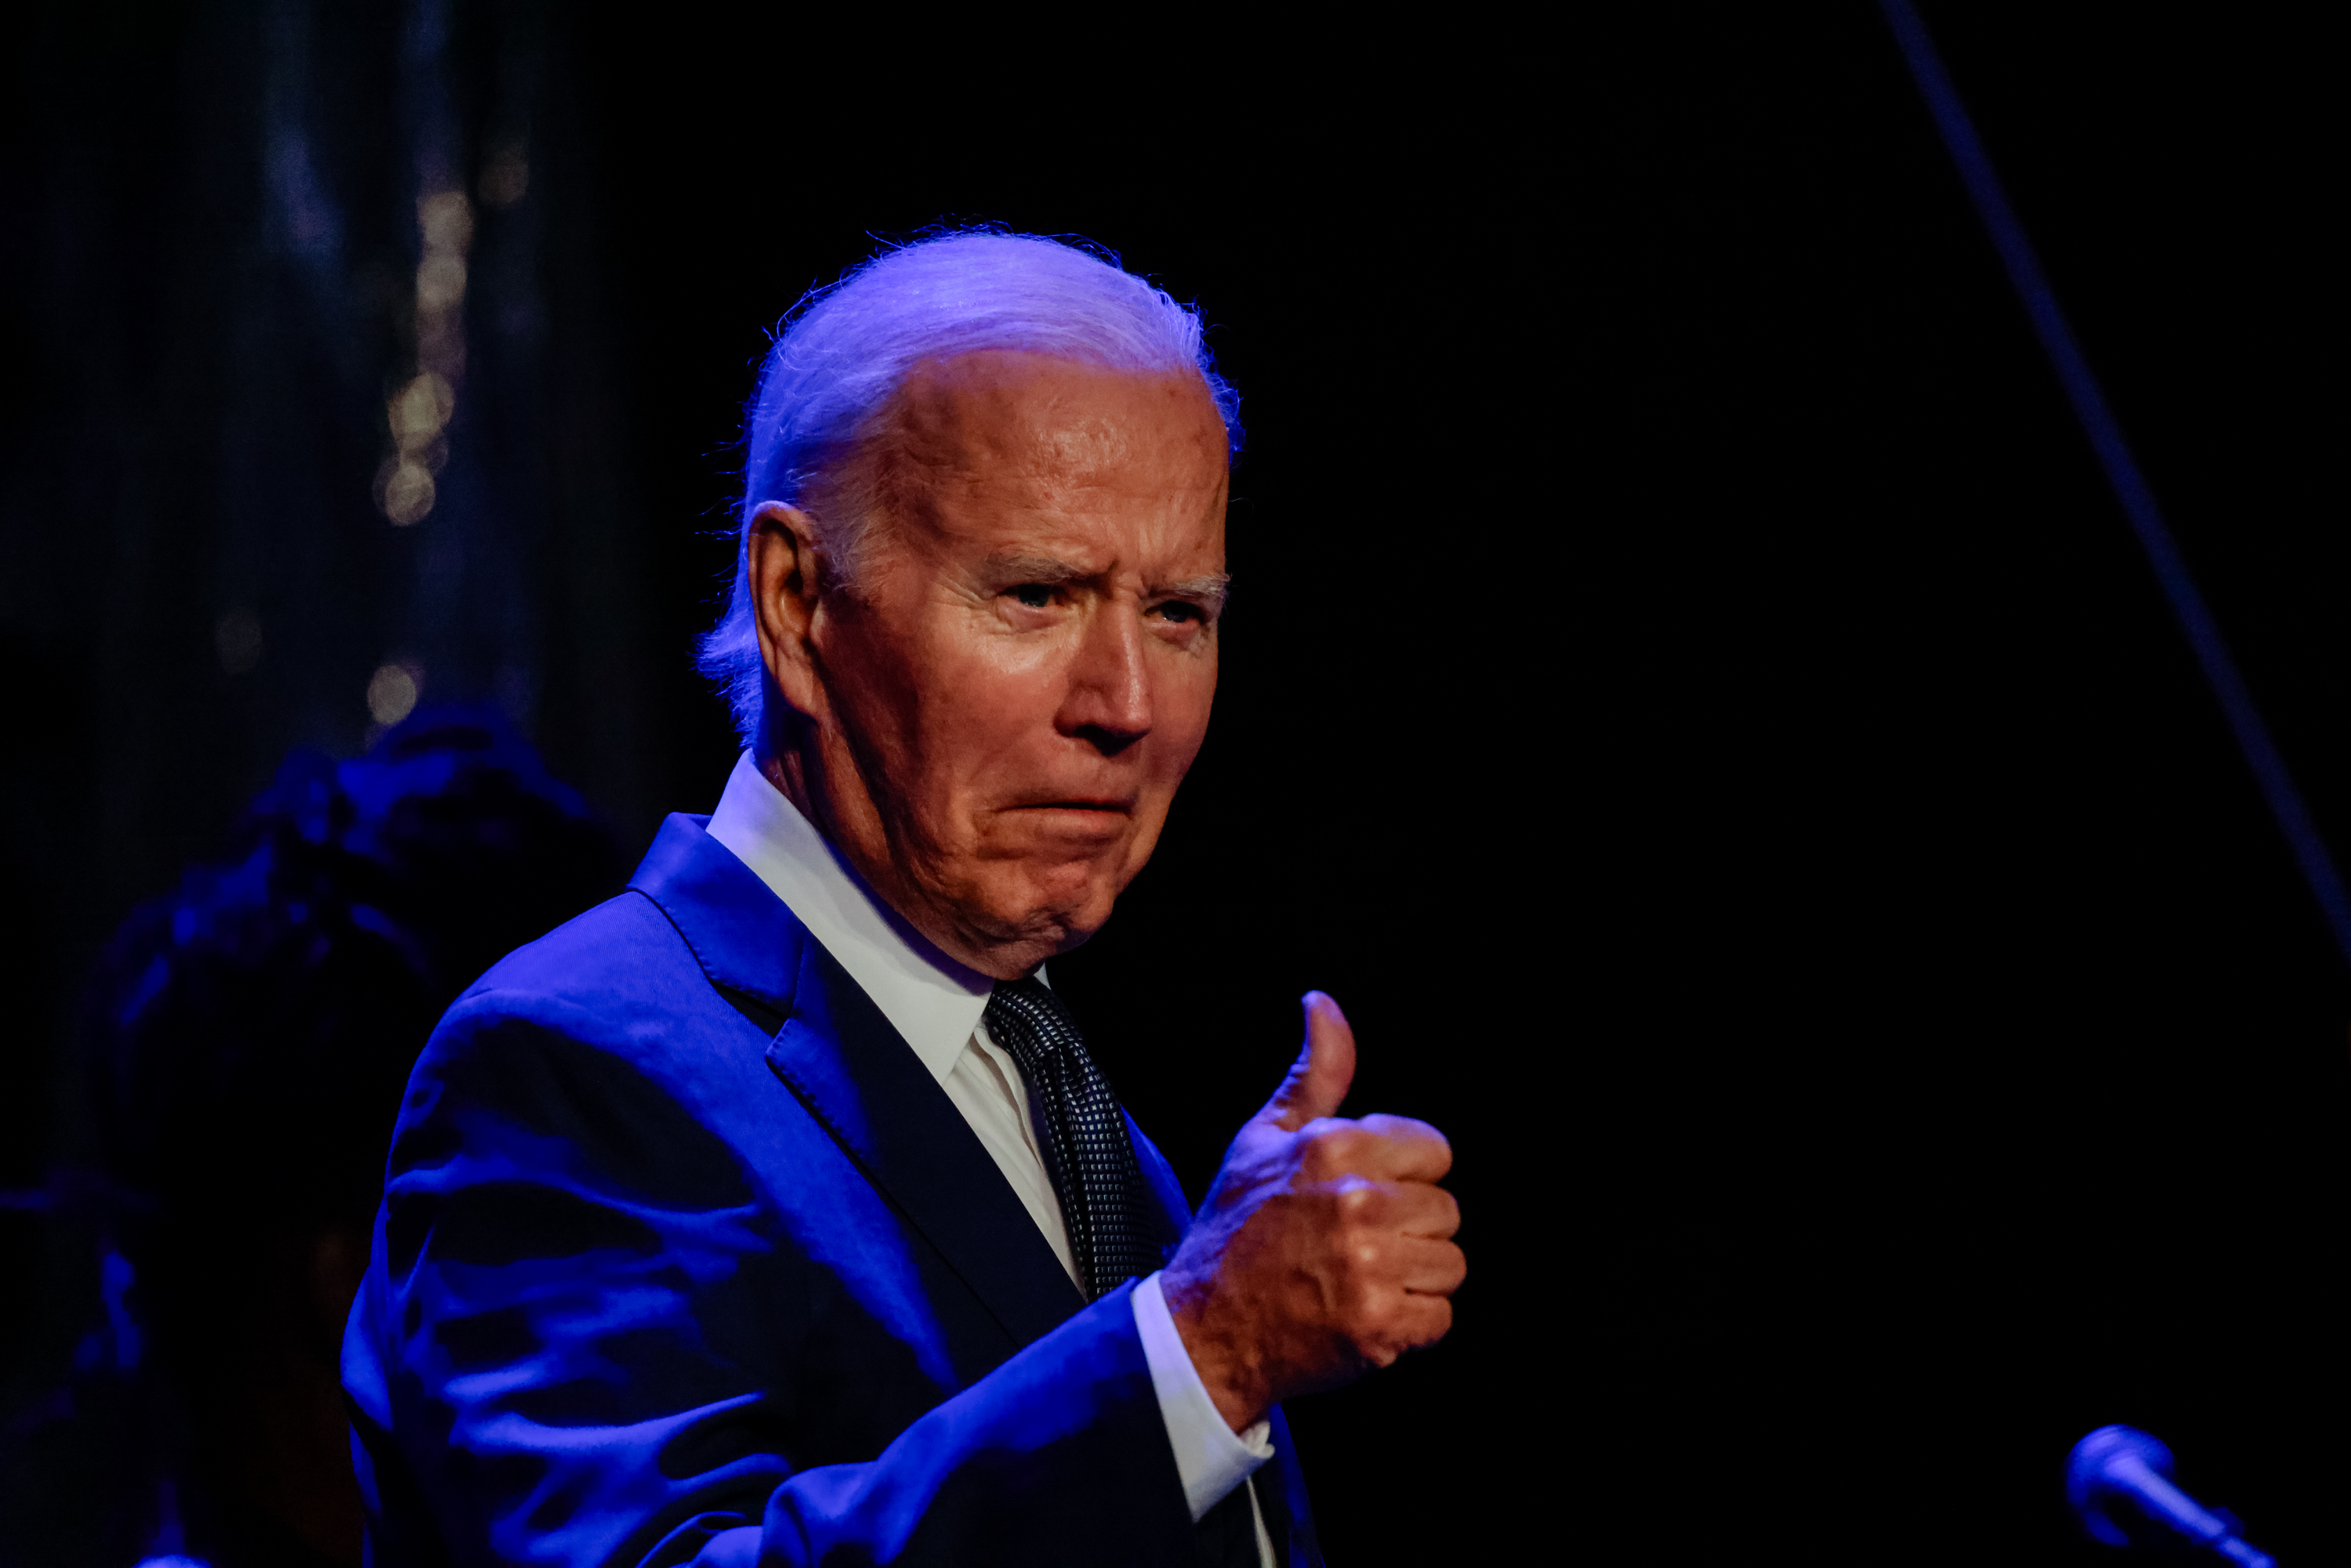 President Joe Biden gives a thumbs up.